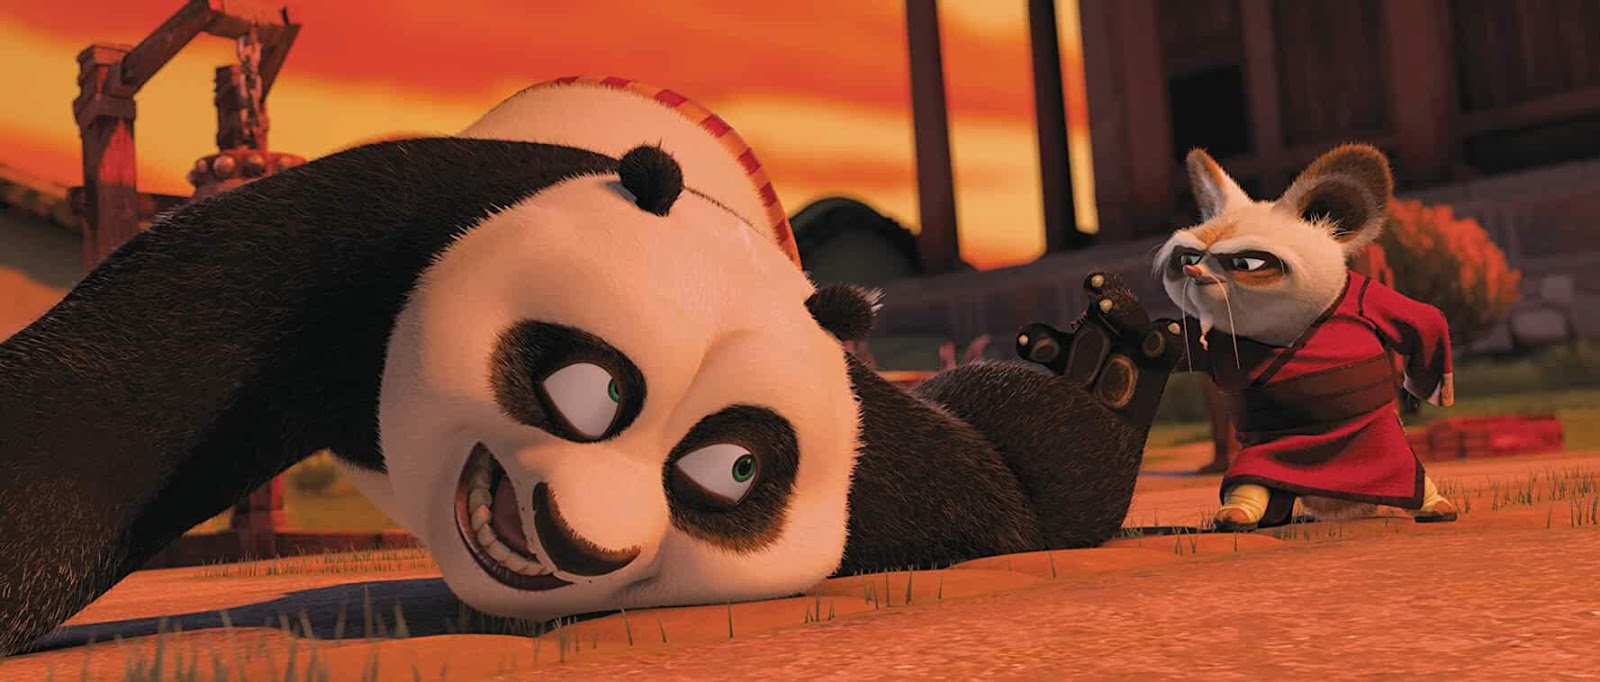 Kung Fu Panda (2008) Full Movie Hindi Dubbed.